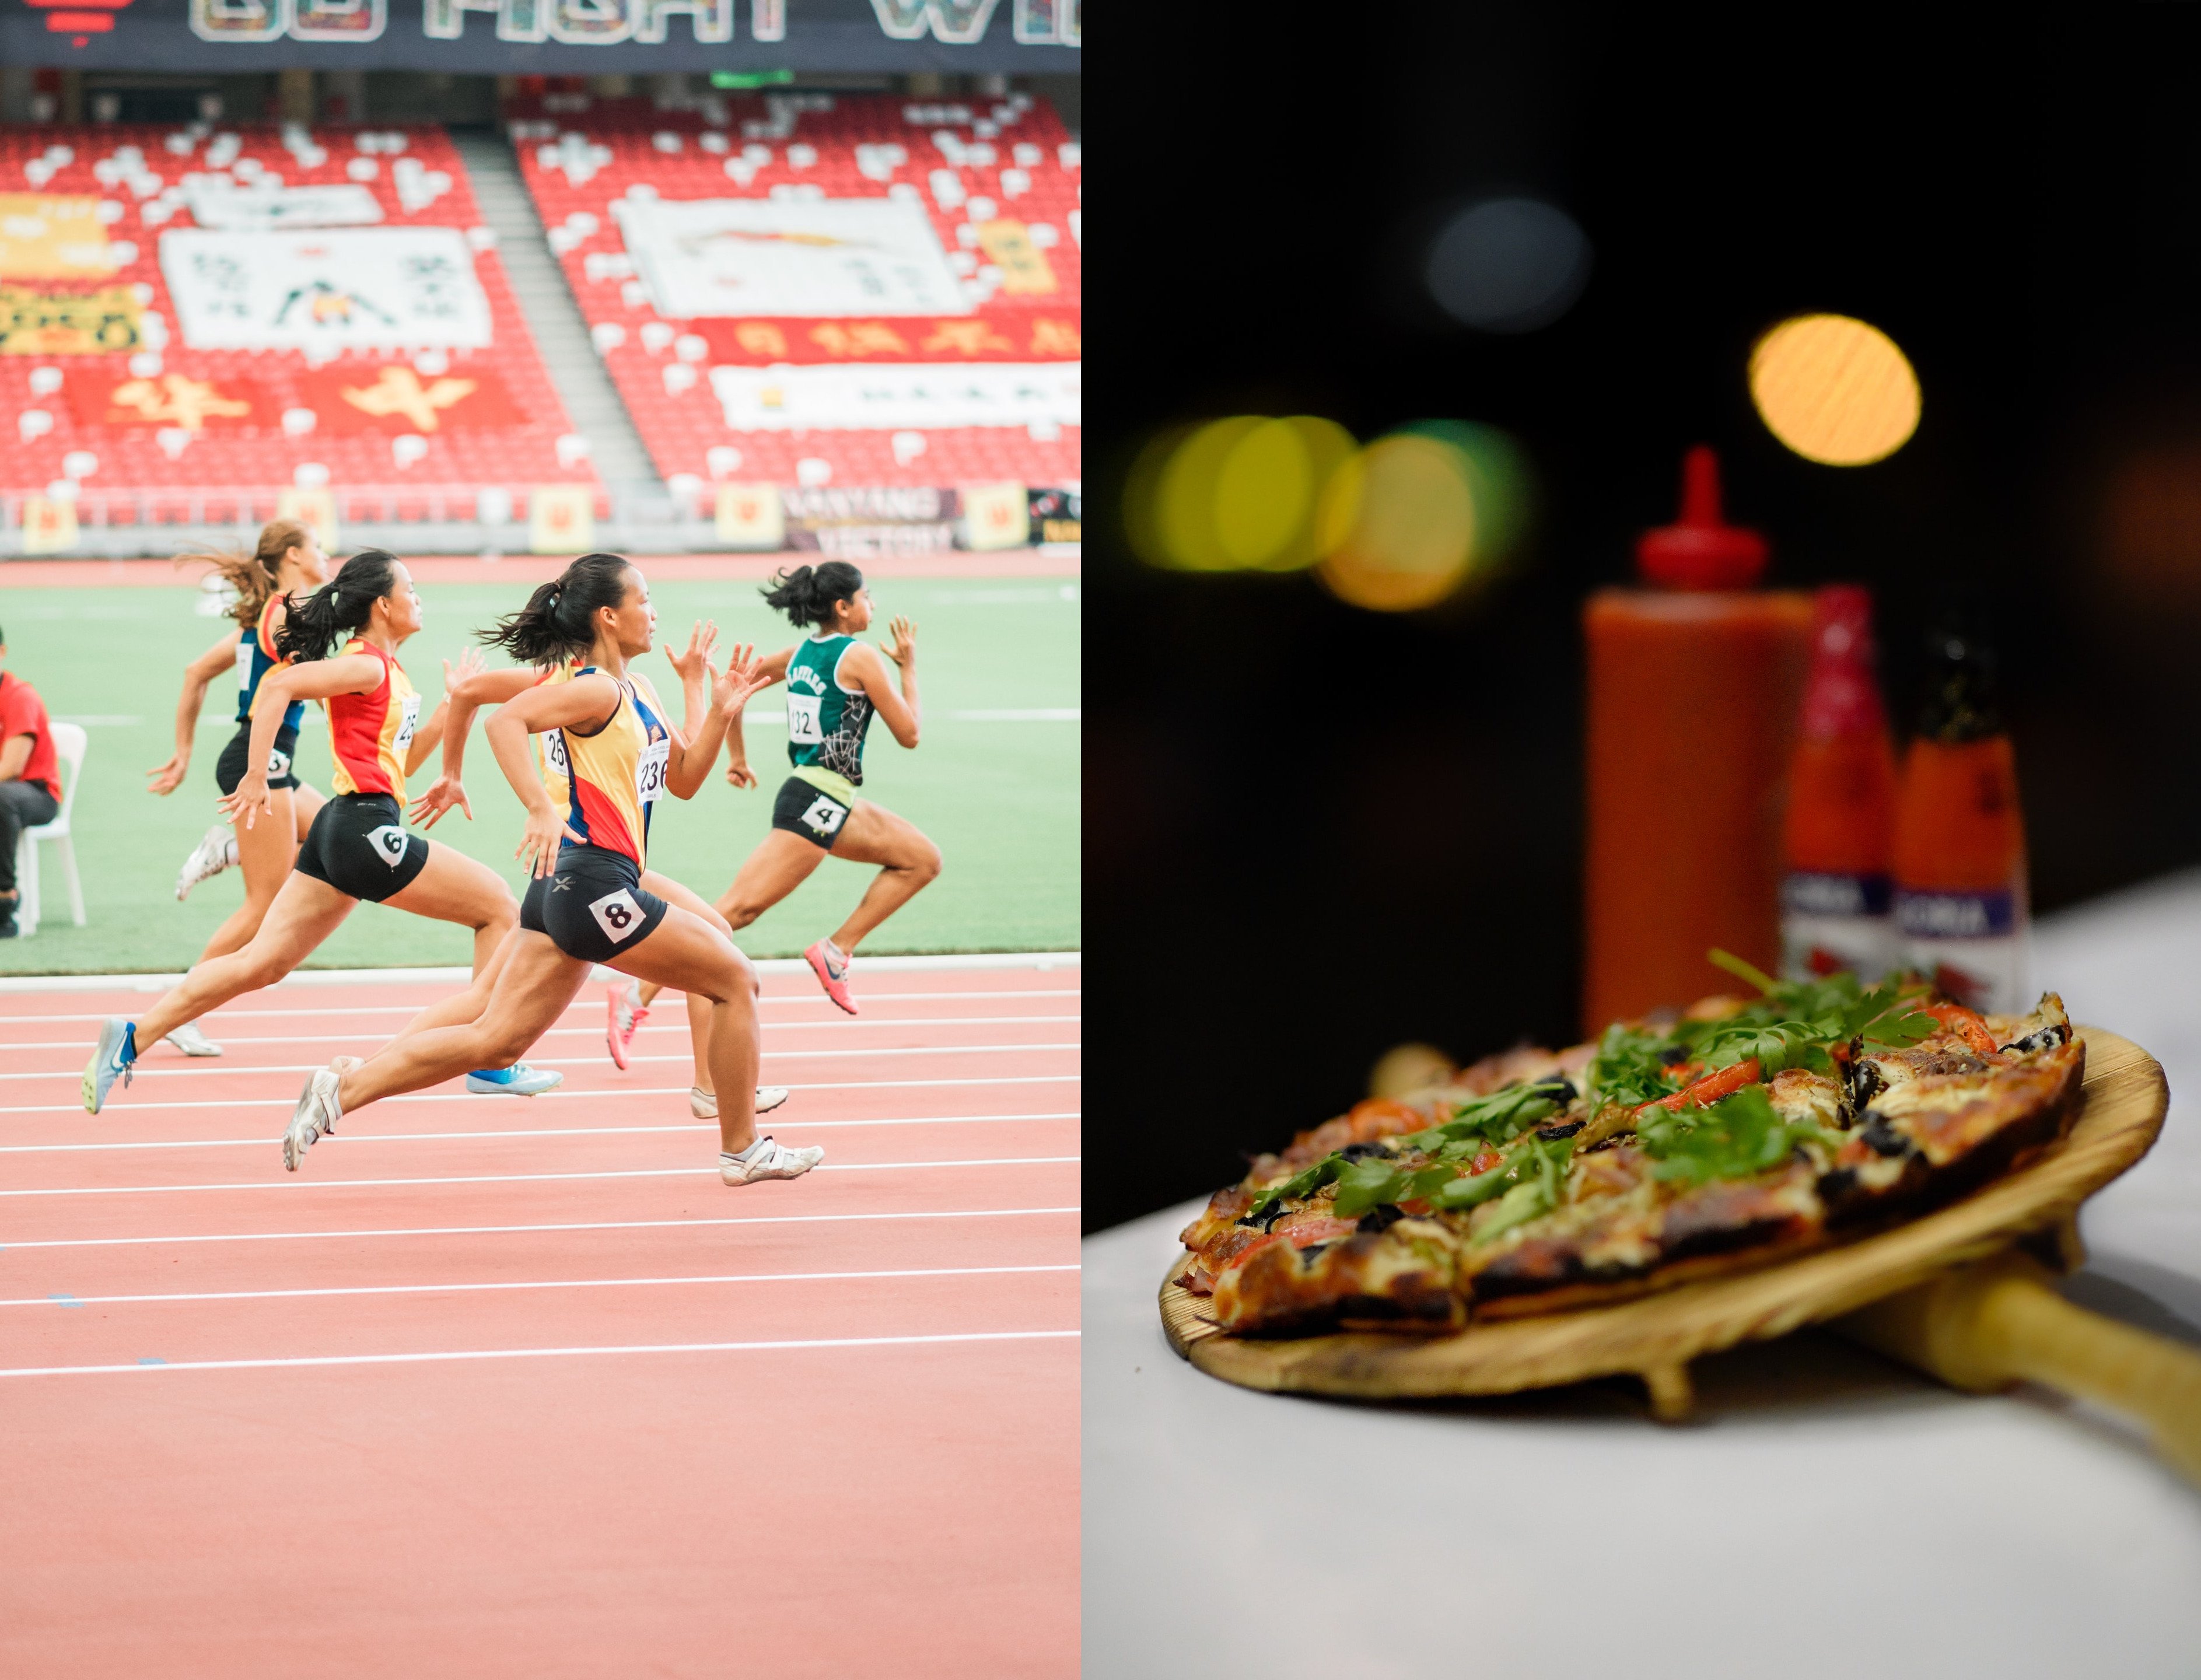 Sprinters running 100m race Alongside freshly baked Veggie Pizza | Source: Unsplash - Unsplash